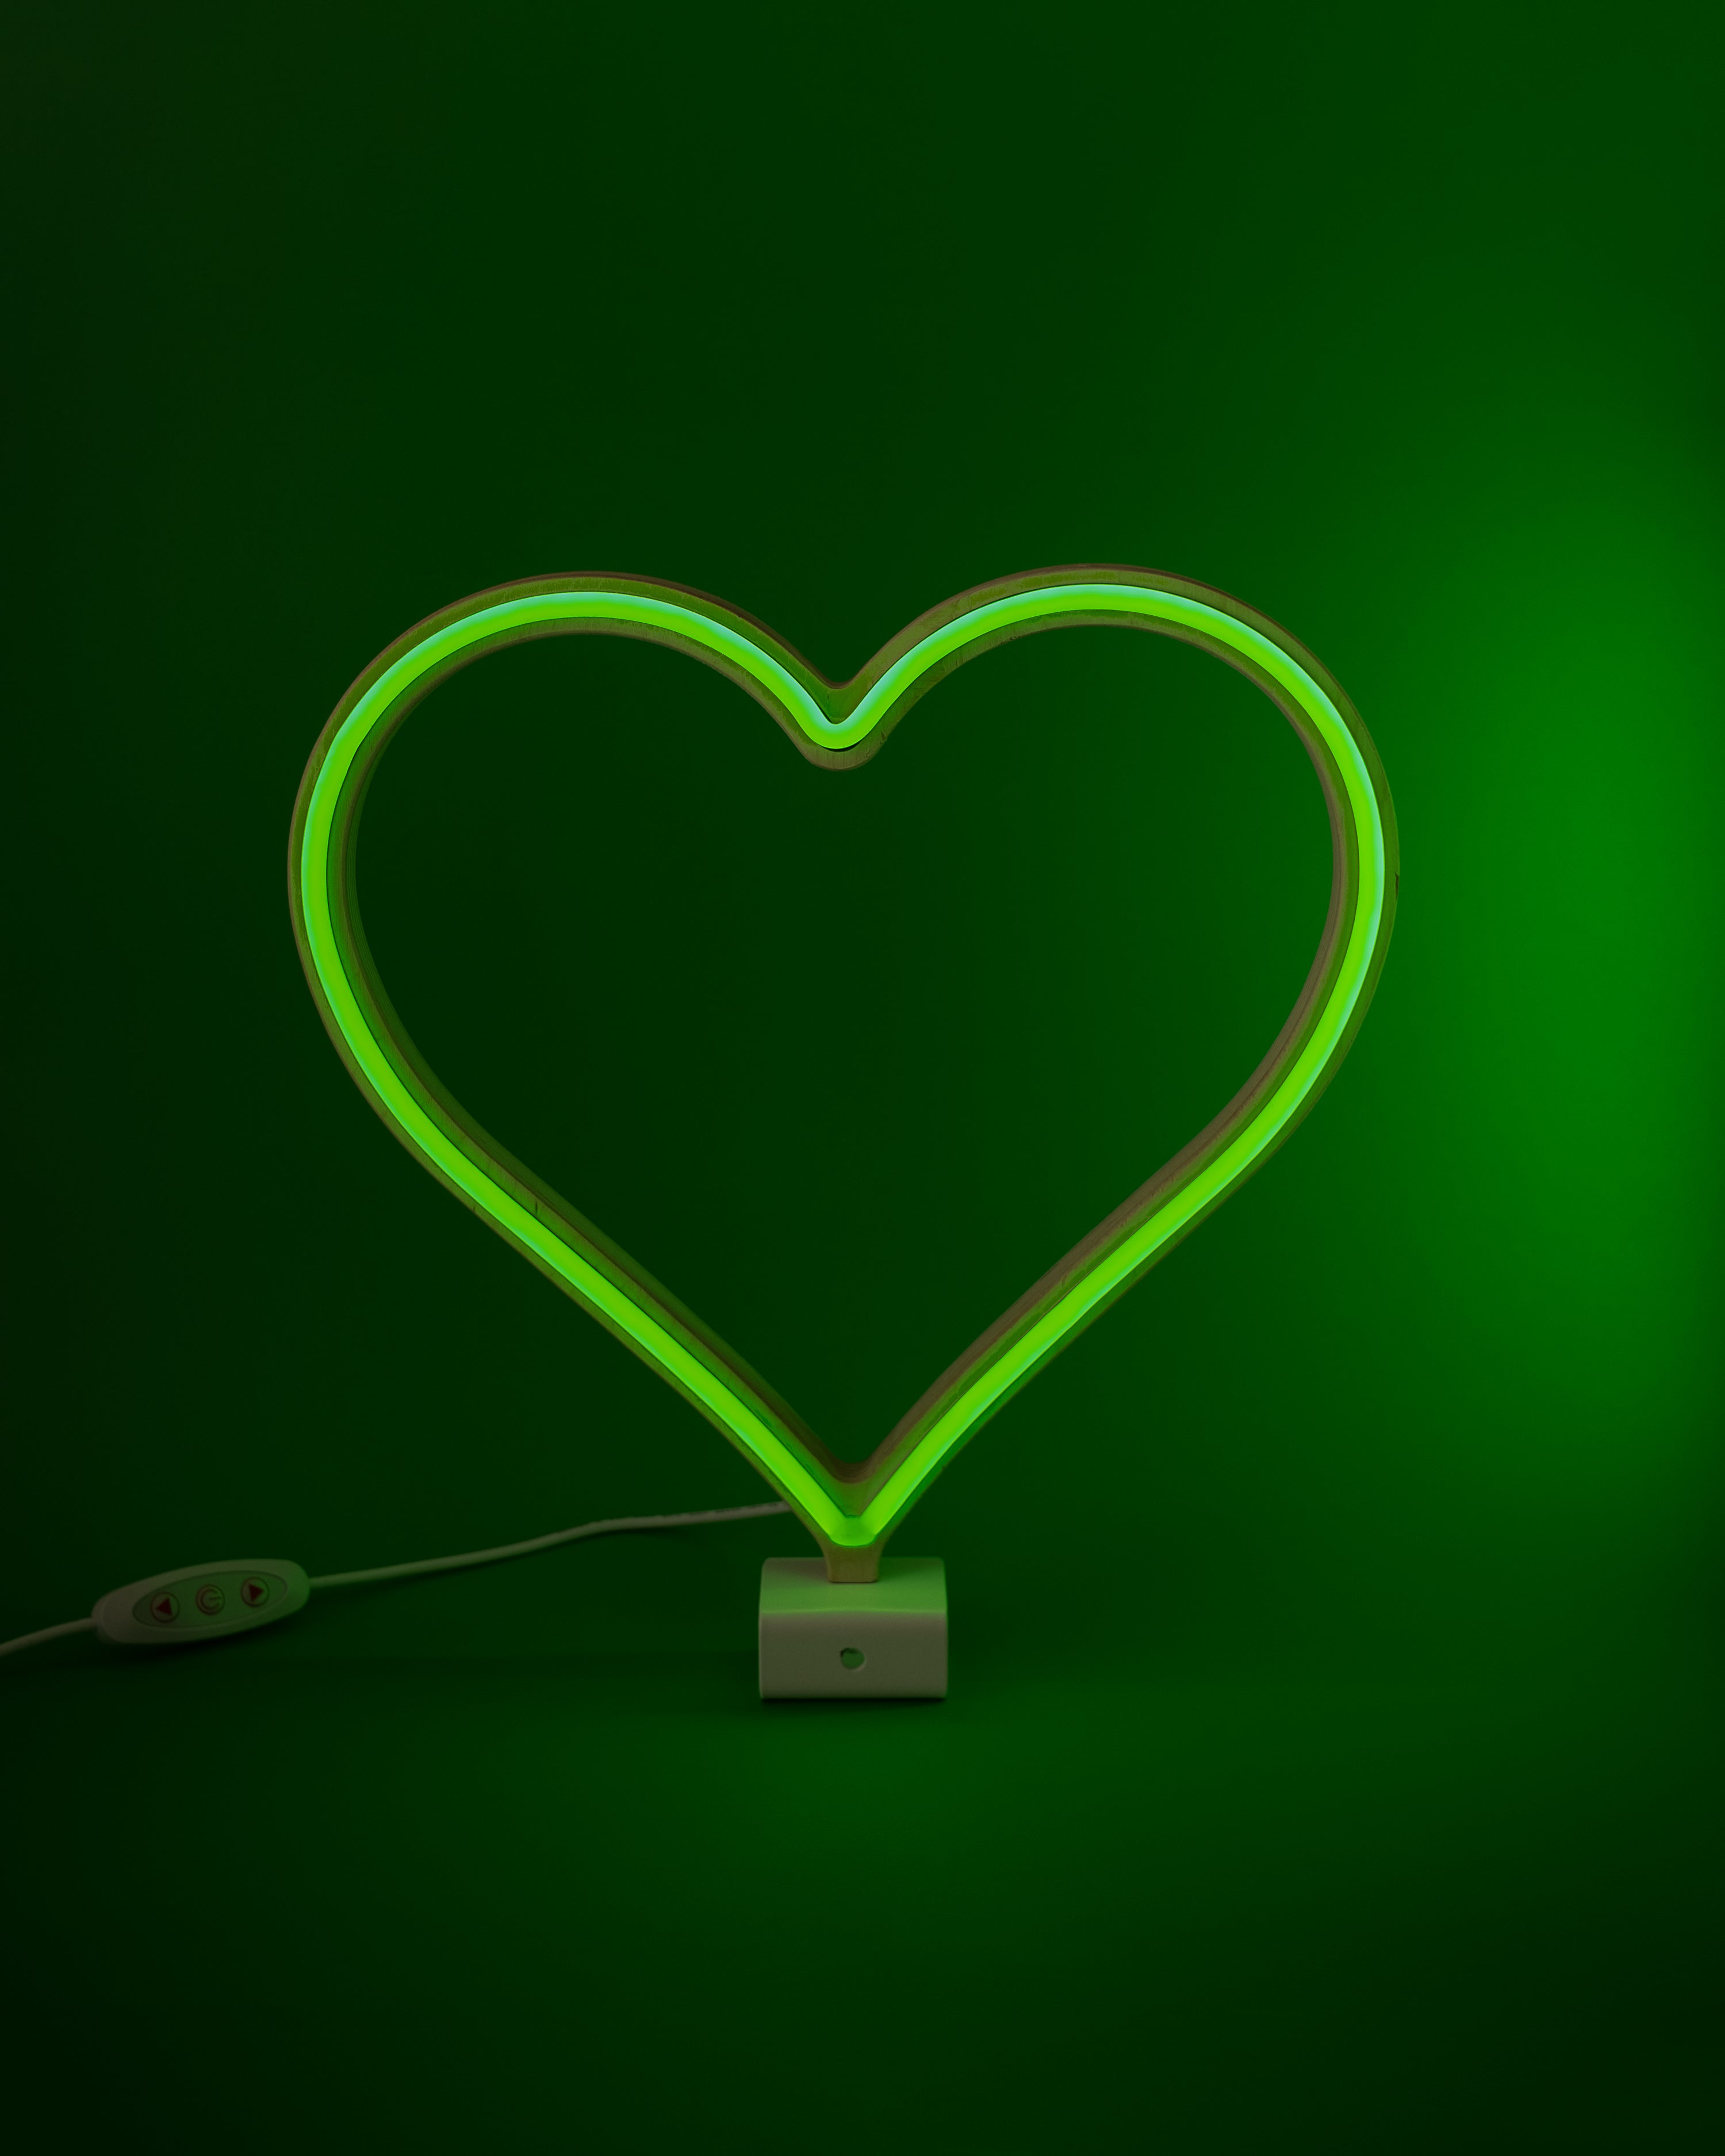 næse Stikke ud Plante træer The Original LED Neon Hero Hearts – Our Glowing Hearts